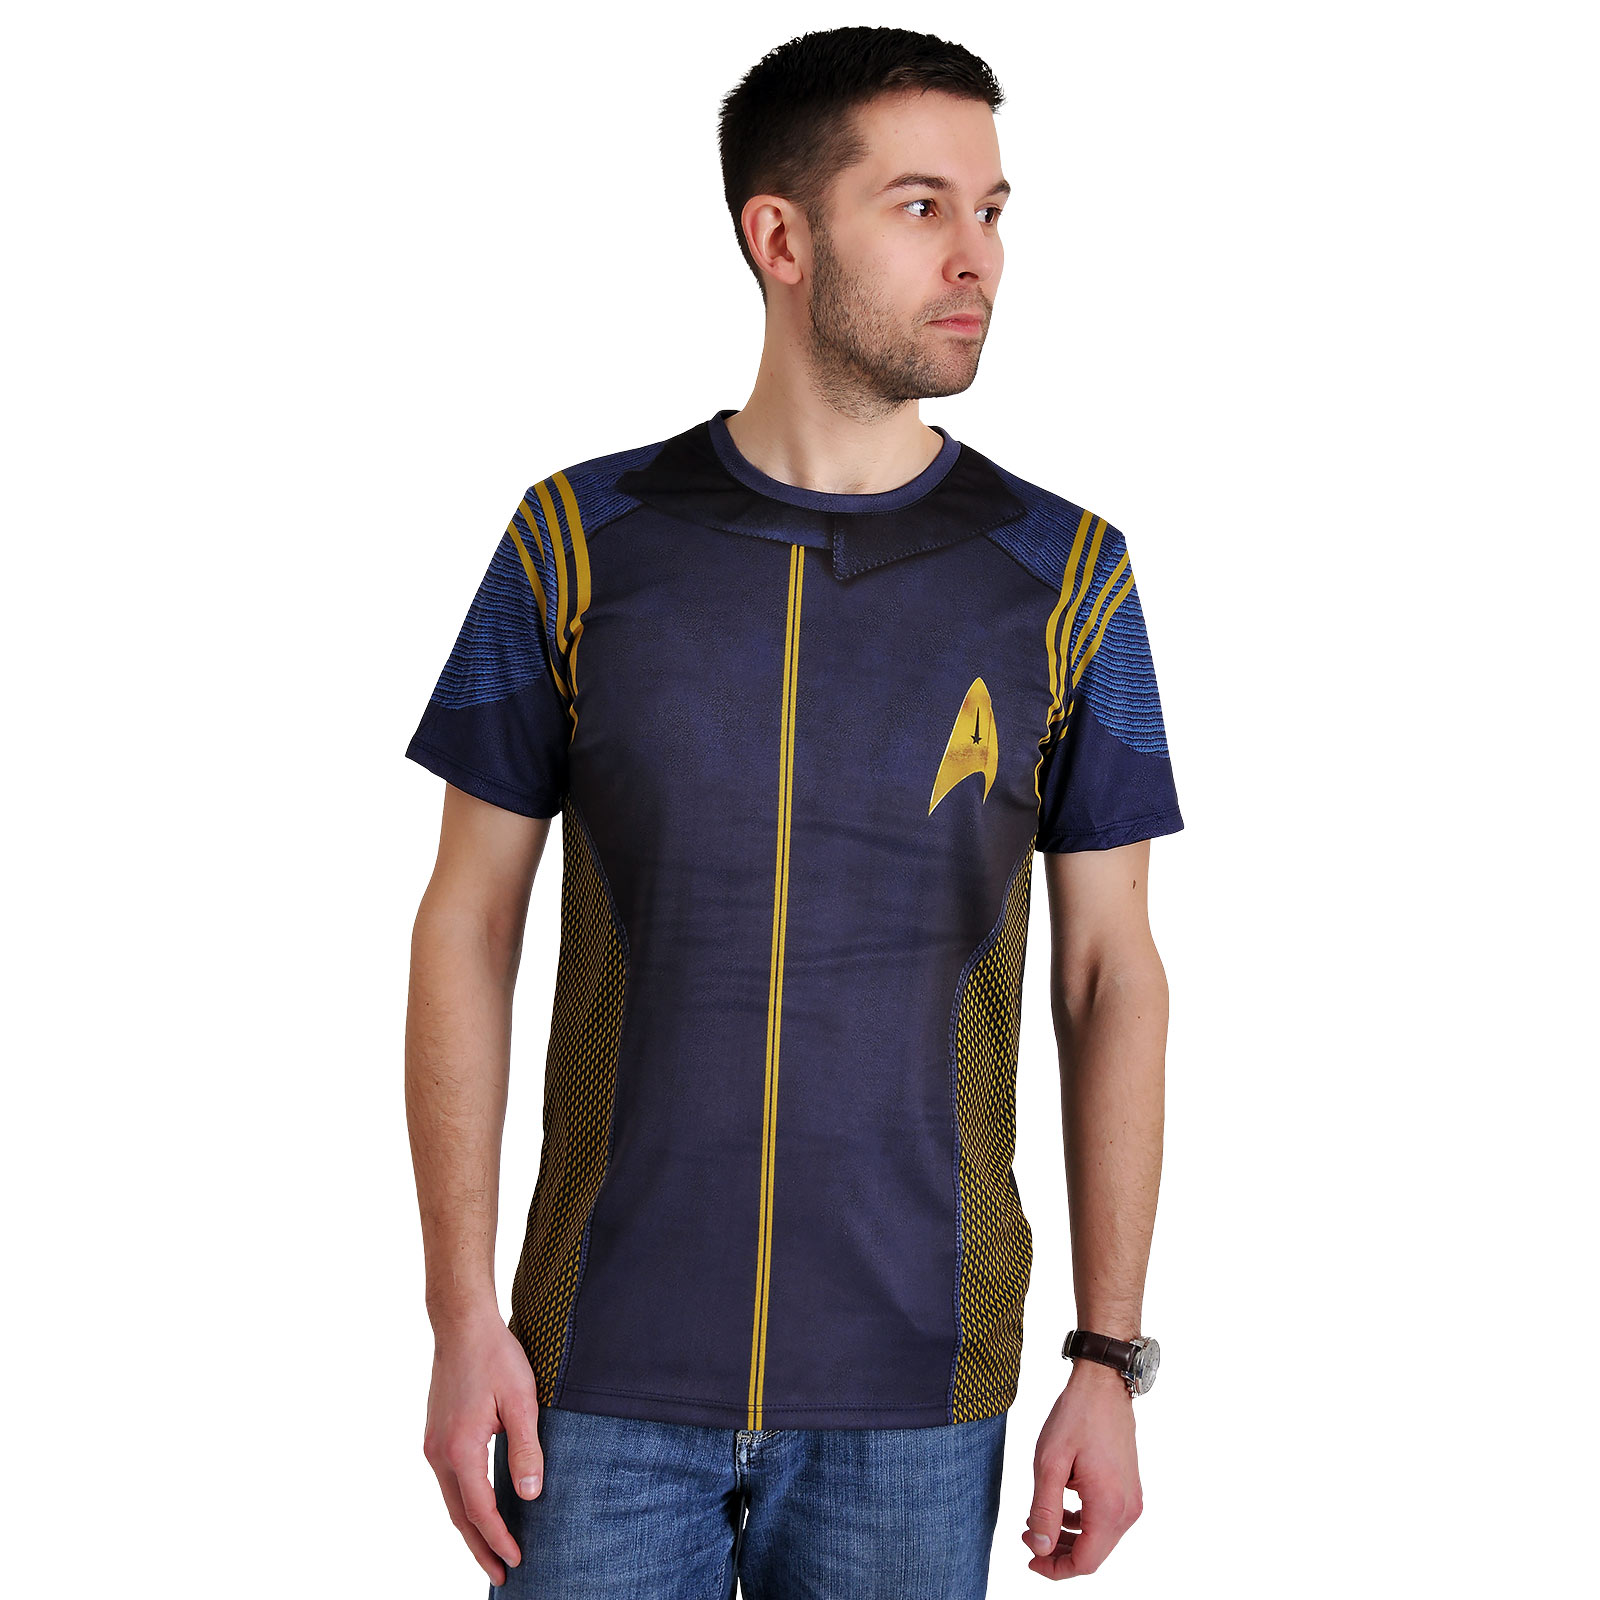 Star Trek - Discovery Commander Uniform T-Shirt blau